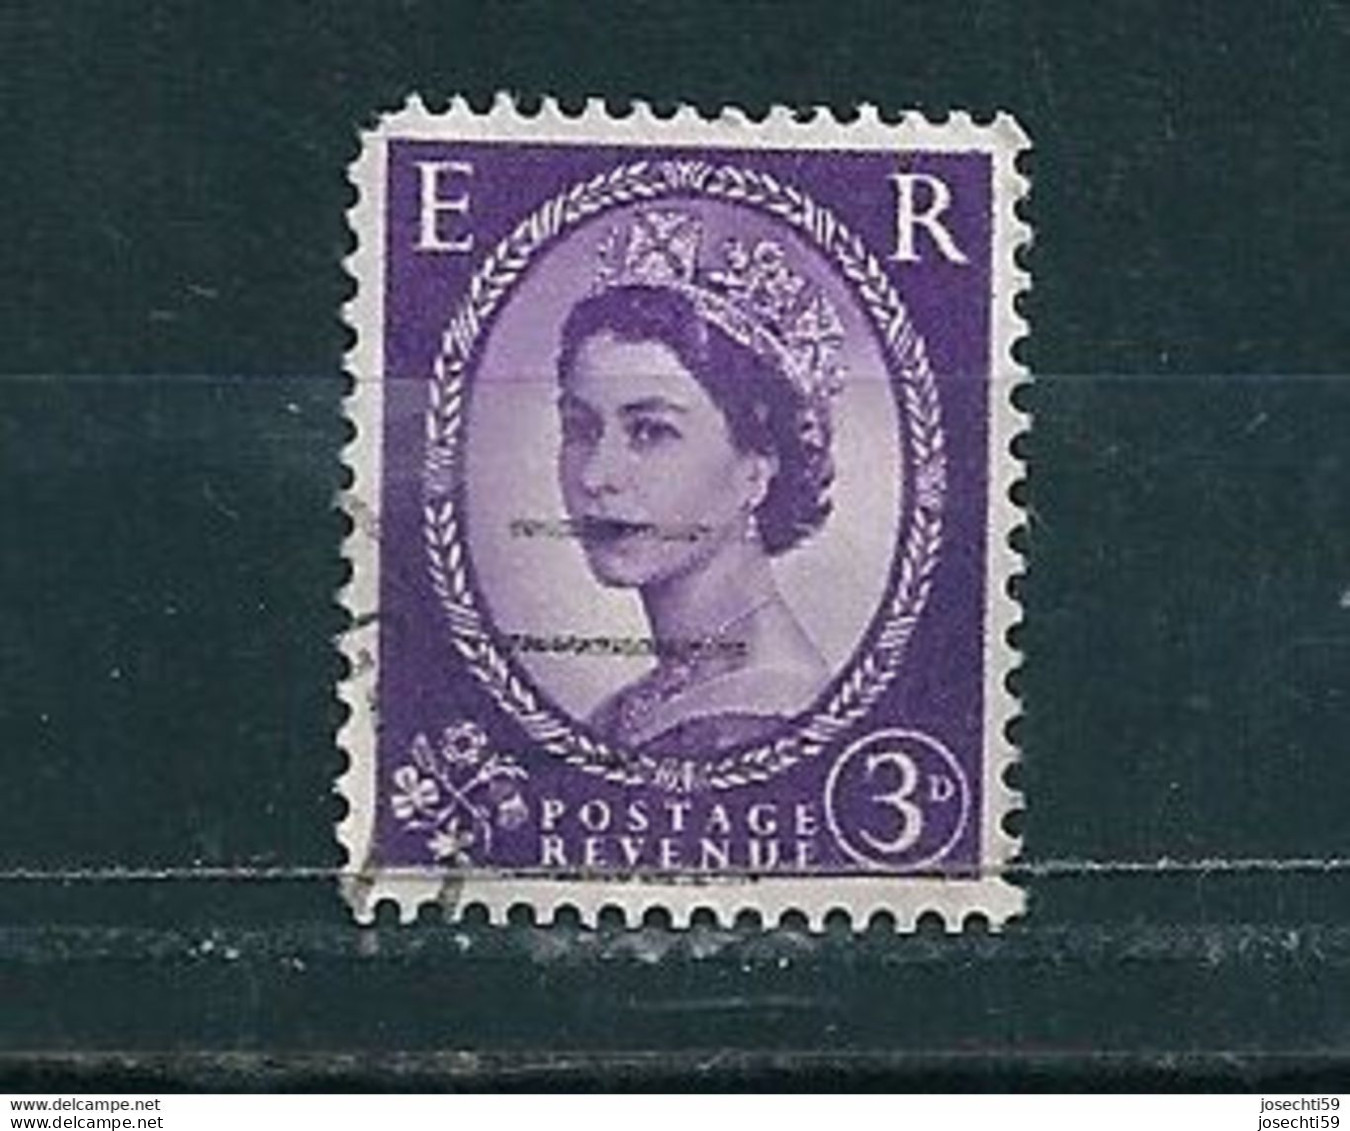 N° 267  Elizabeth II  Timbre Stamp  GRANDE BRETAGNE GB 1952  3d  Postage Revenue - Usati